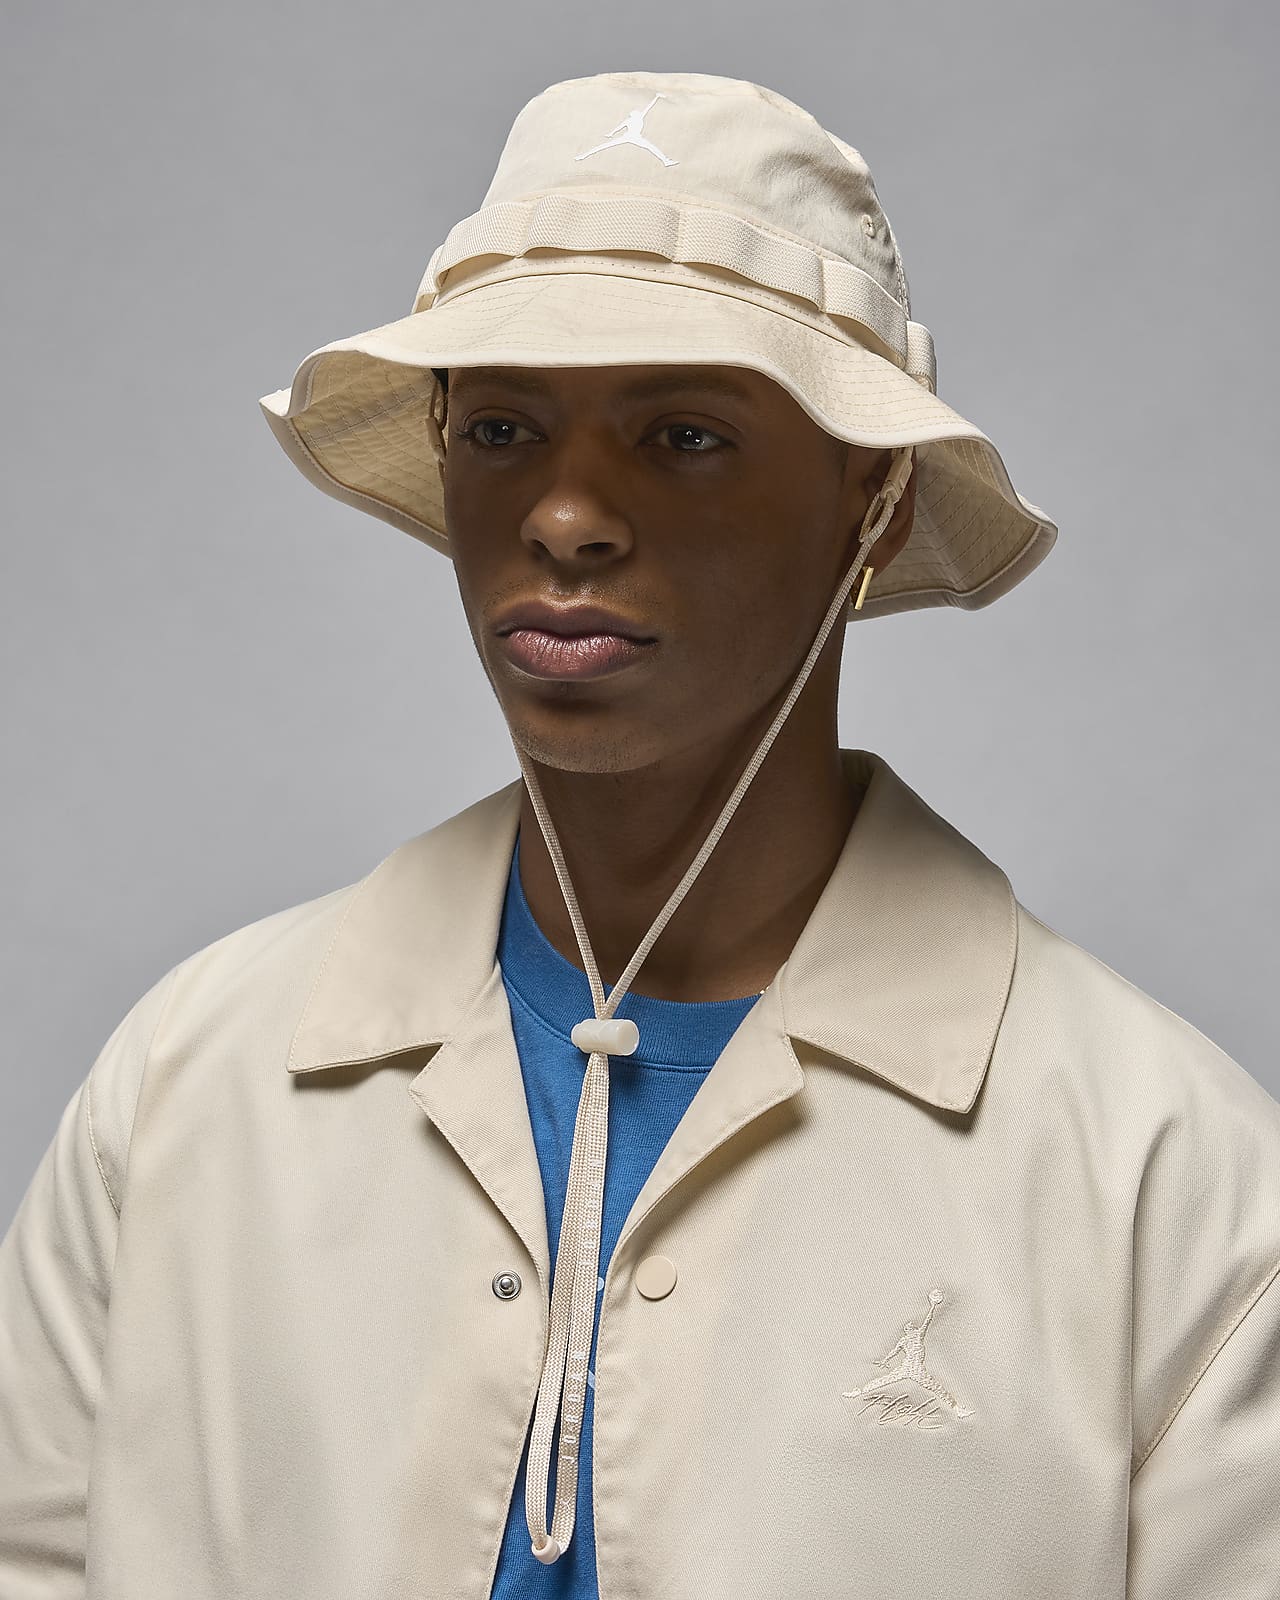 Jordan Apex Bucket Hat